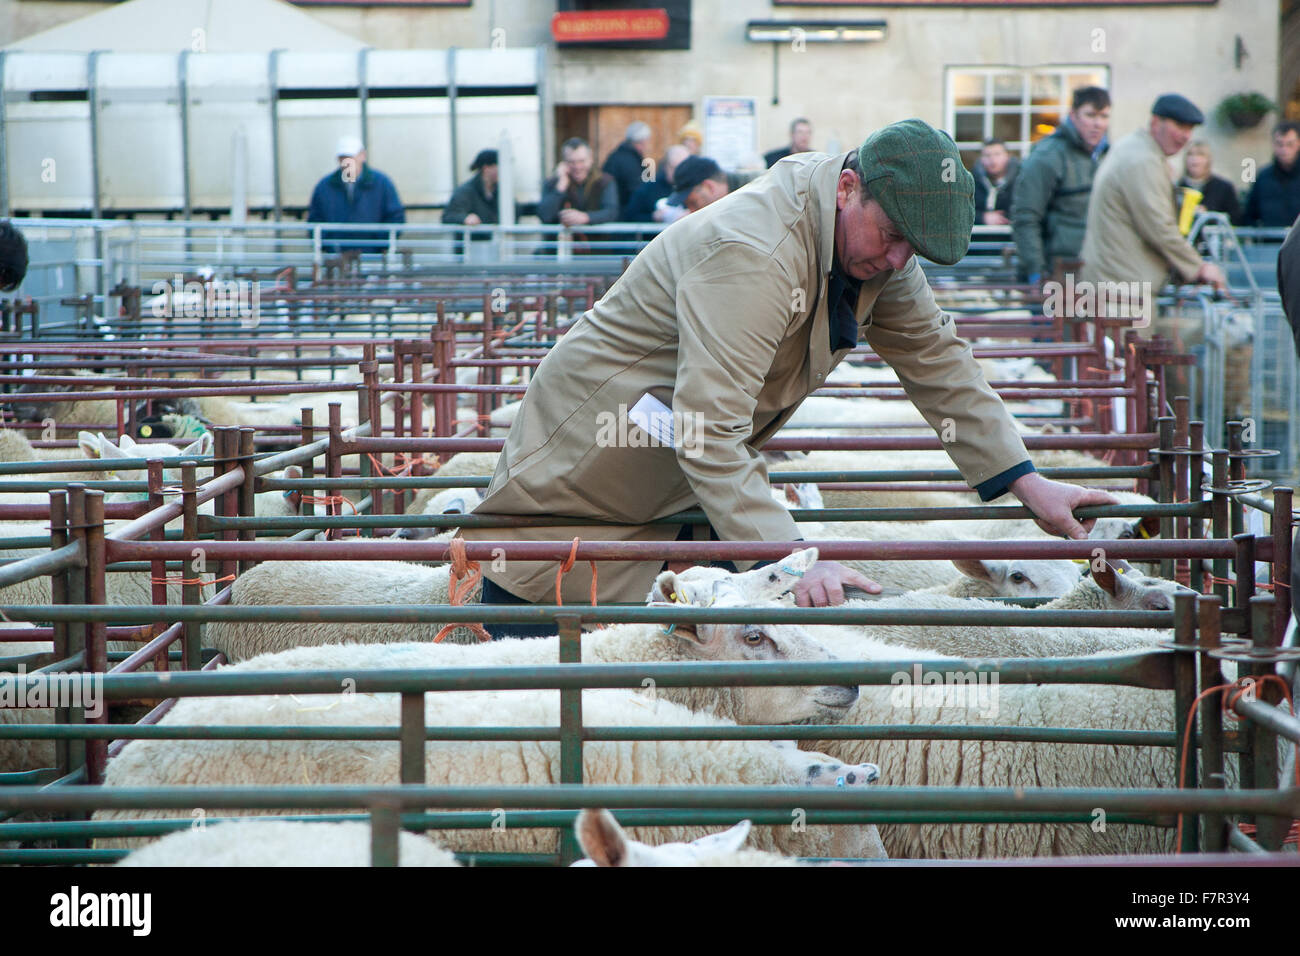 Uppingham, Rutland, UK., 2nd Dec 2015. The sheep pens in the Market Place at Uppingham, Rutland UK. Credit:  Jim Harrison/Alamy Live News Stock Photo